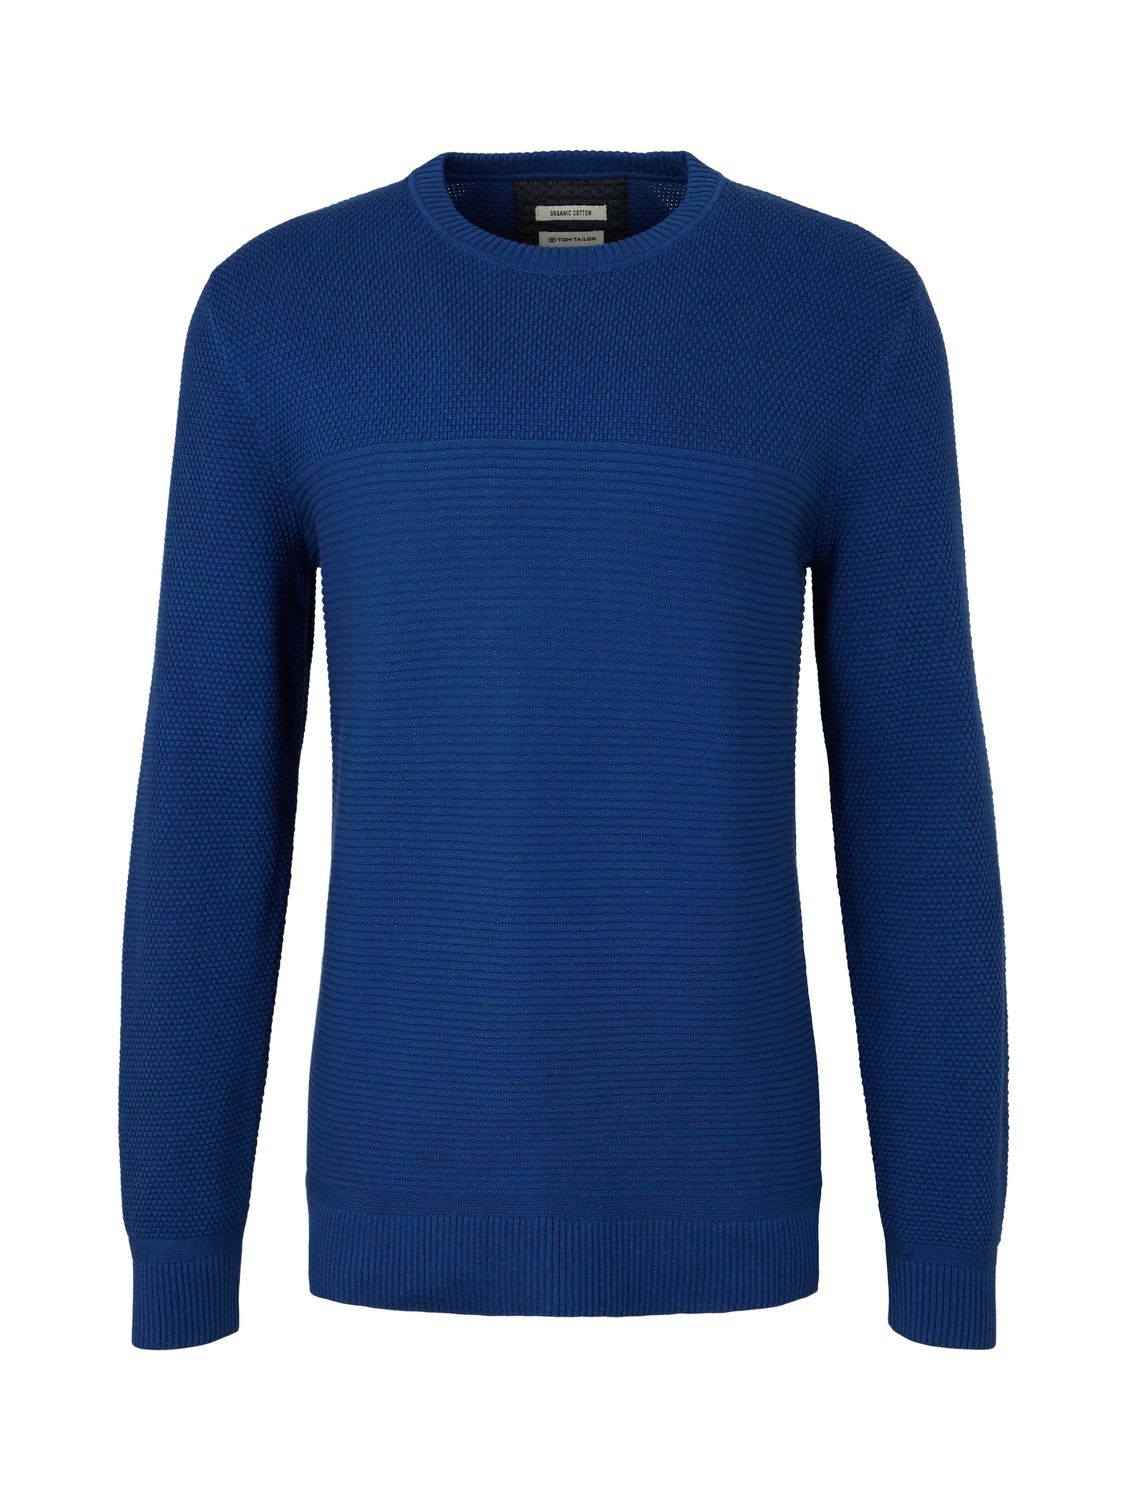 Пуловер Tom Tailor BASIC STRUCTURED, синий пуловер tom tailor denim structured doublelayer бежевый